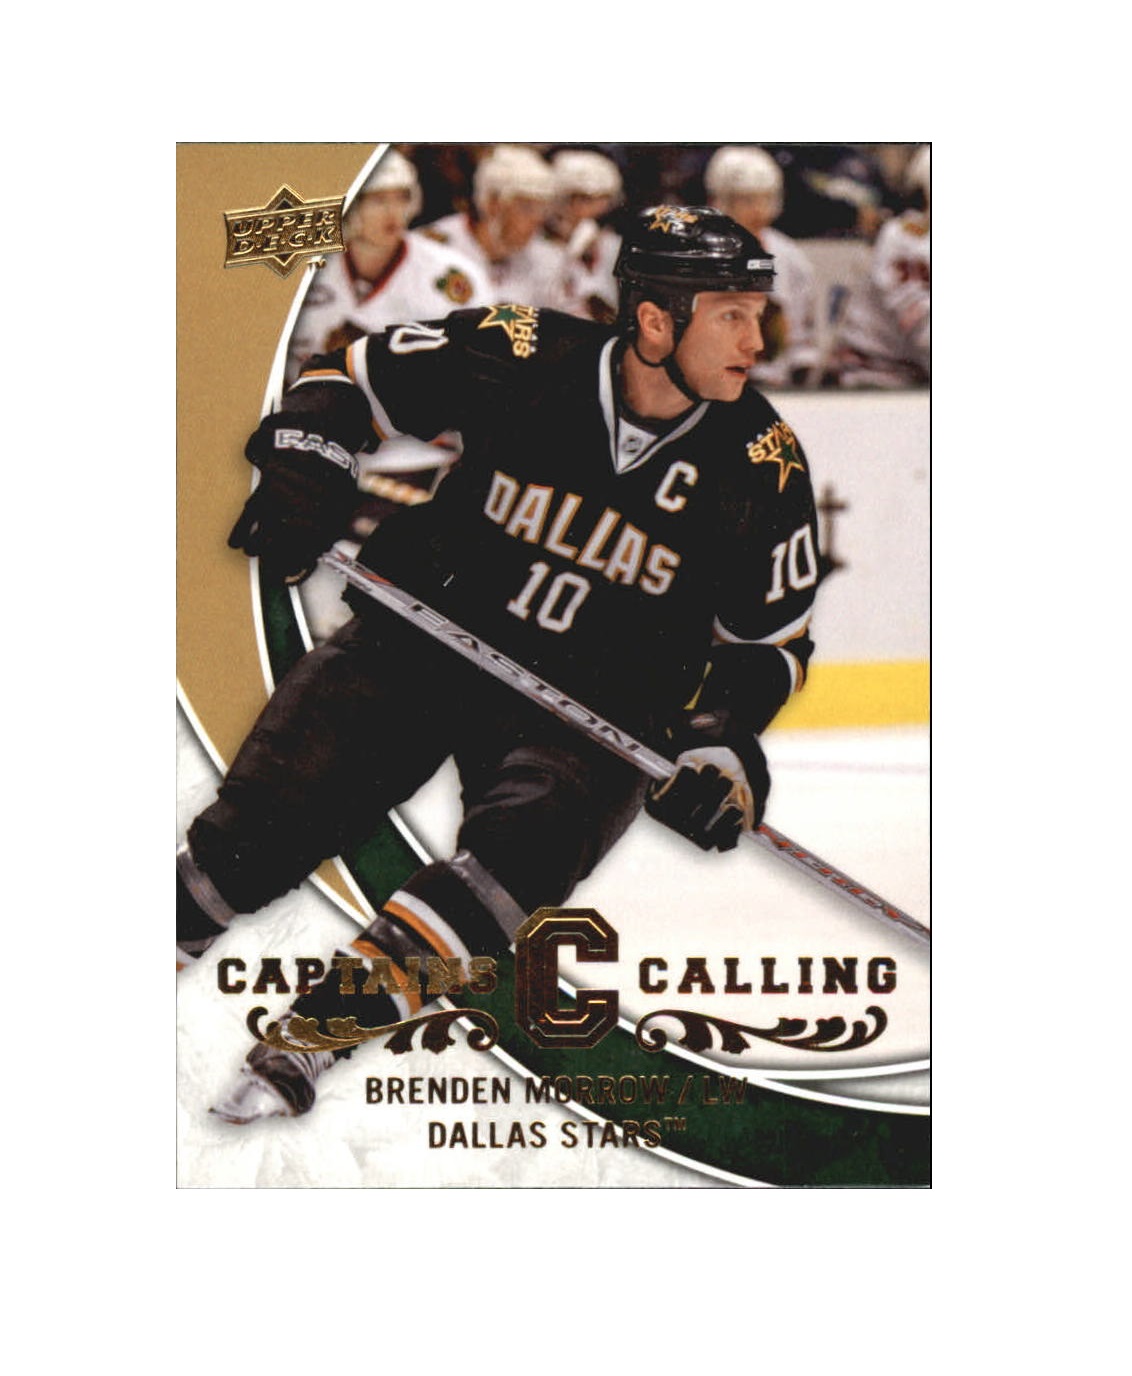 2008-09 Upper Deck Captains Calling #CPT6 Brenden Morrow (10-X117-NHLSTARS) (2)